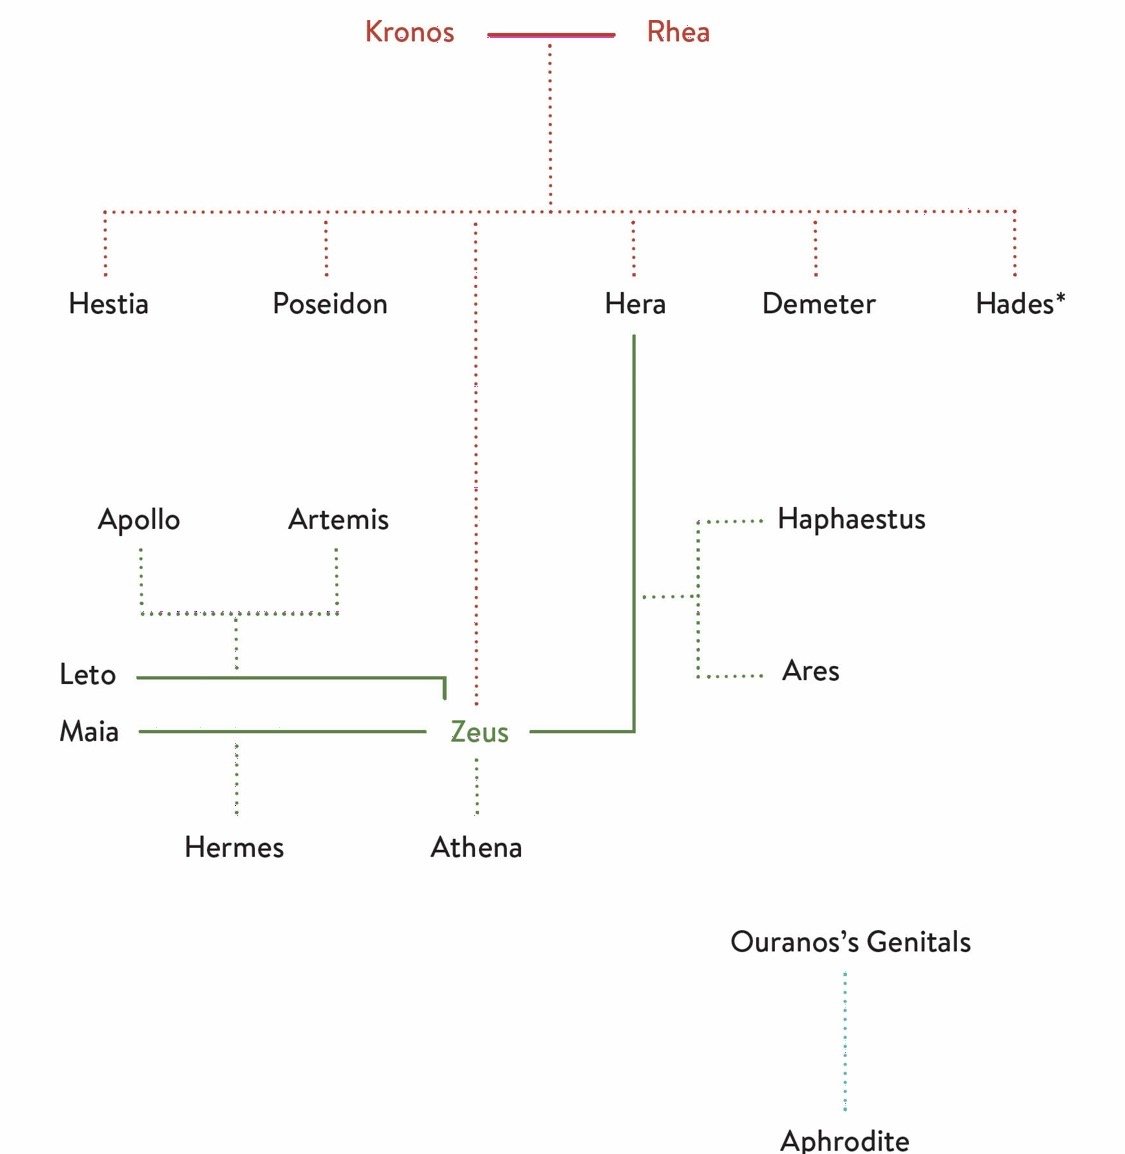 Kronos-Rhea Family Tree.jpeg